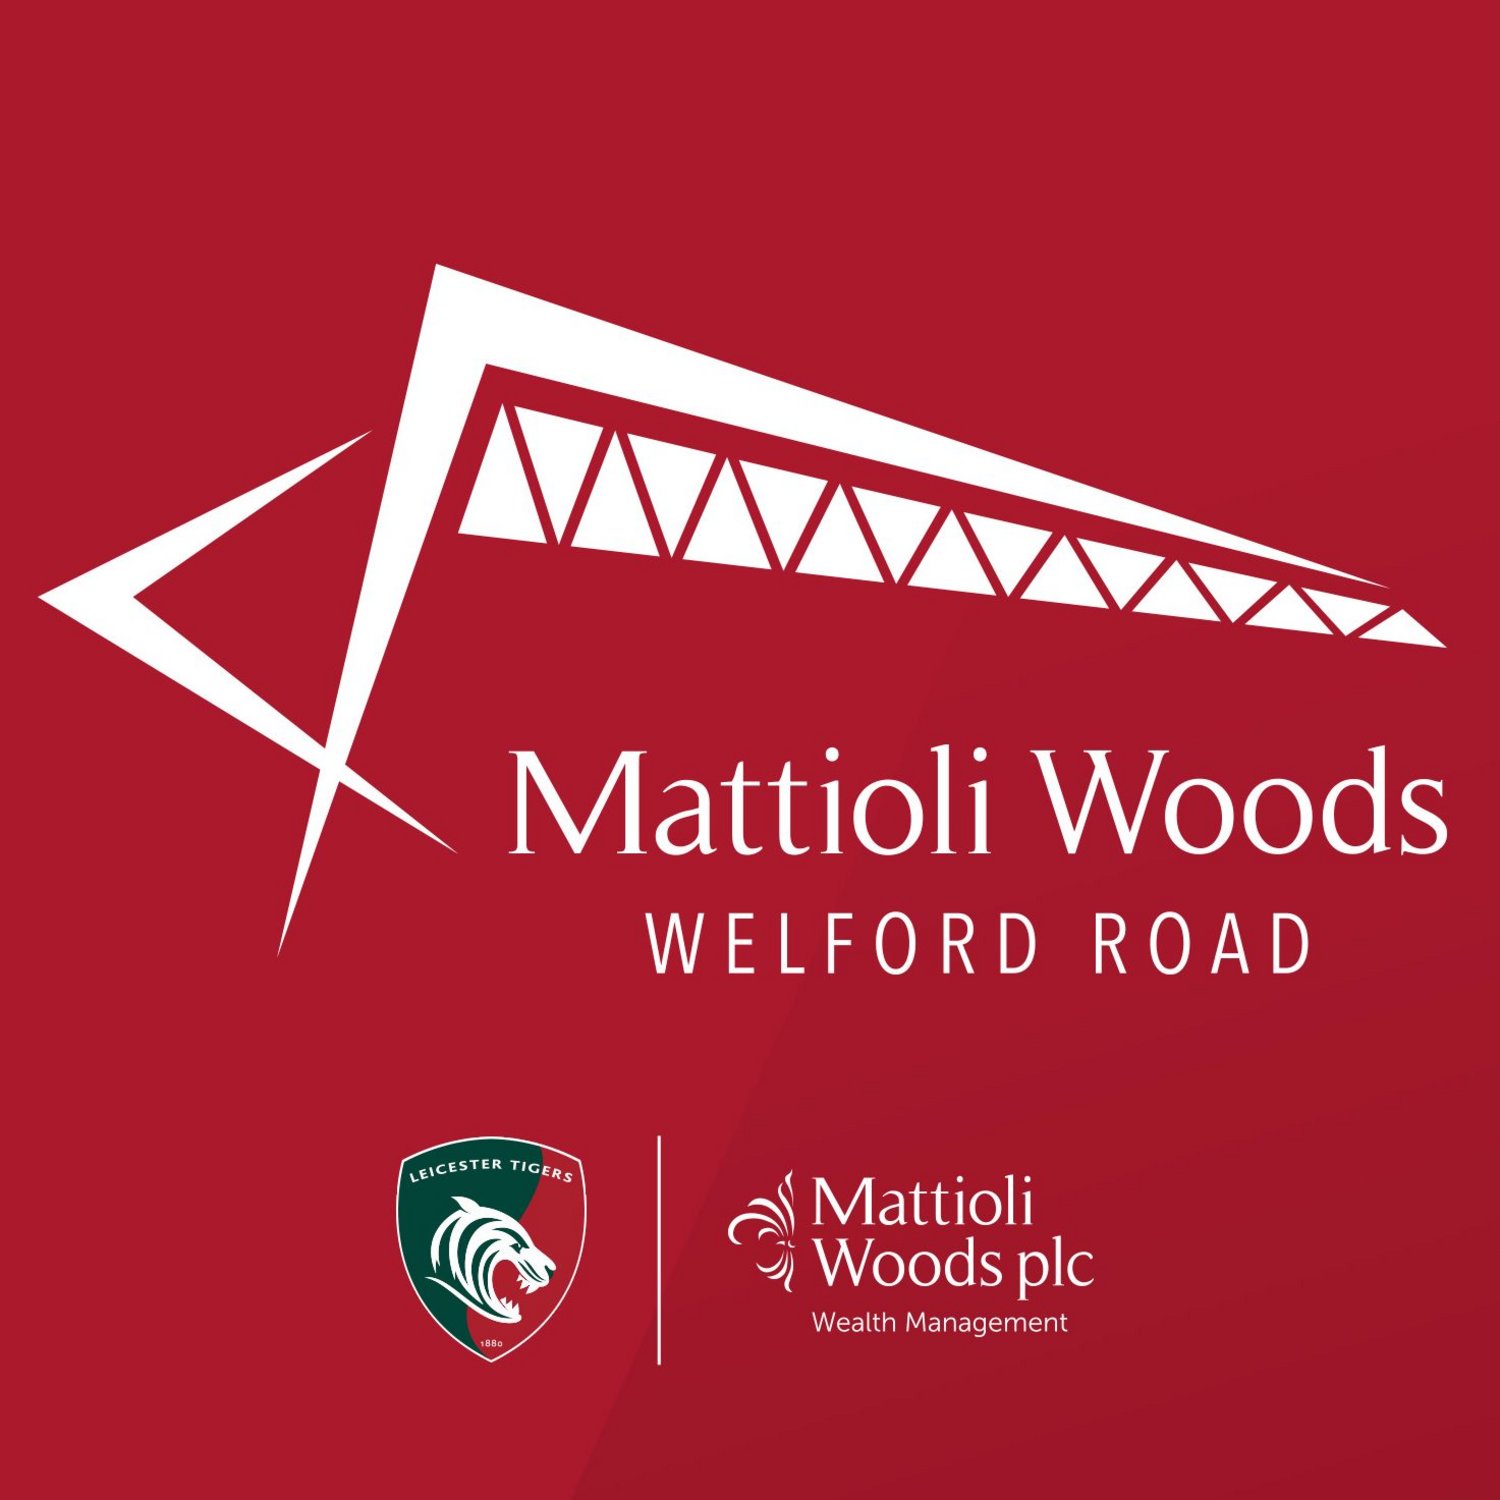 Mattioli Woods Welford Road